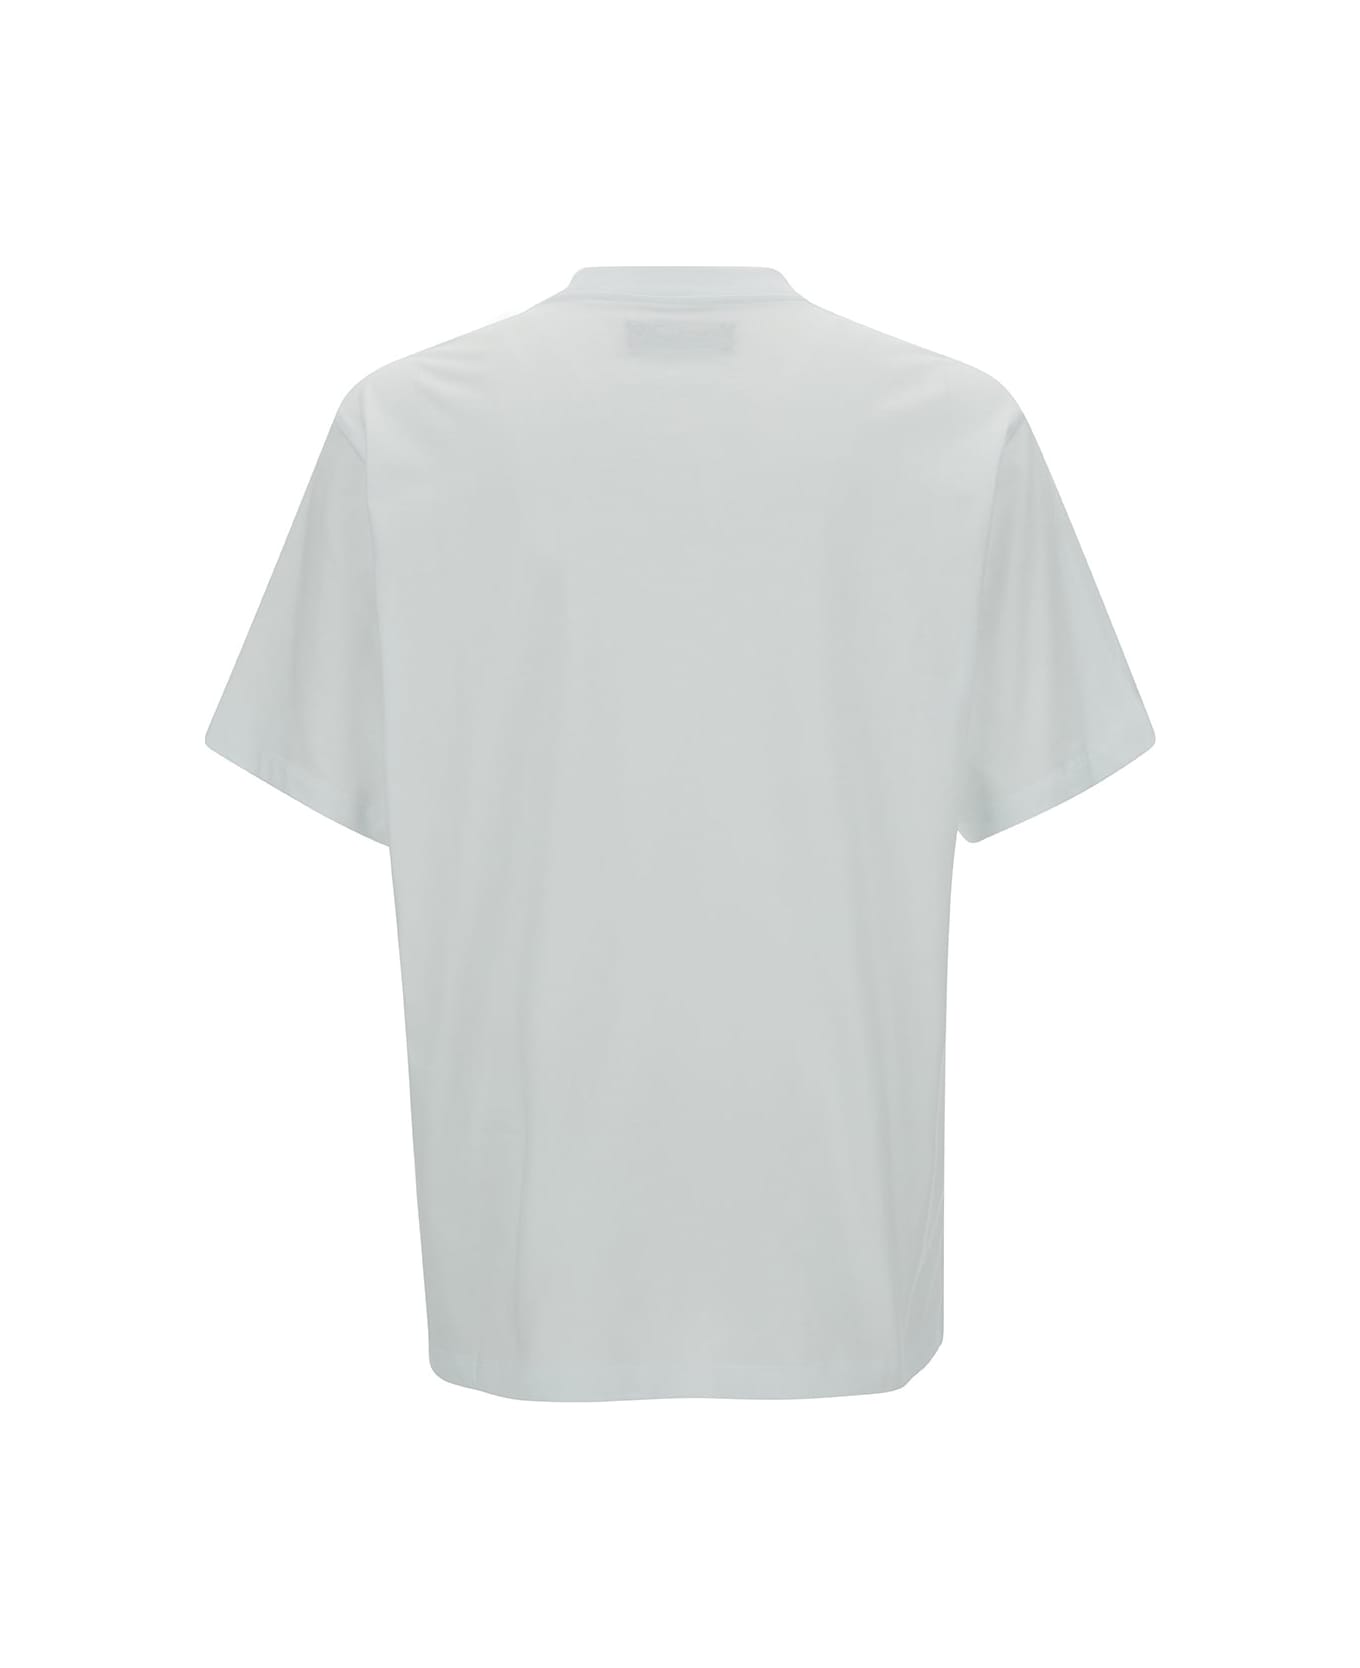 AMIRI White T-shirt With Contrasting Logo Print In Cotton Man - White シャツ